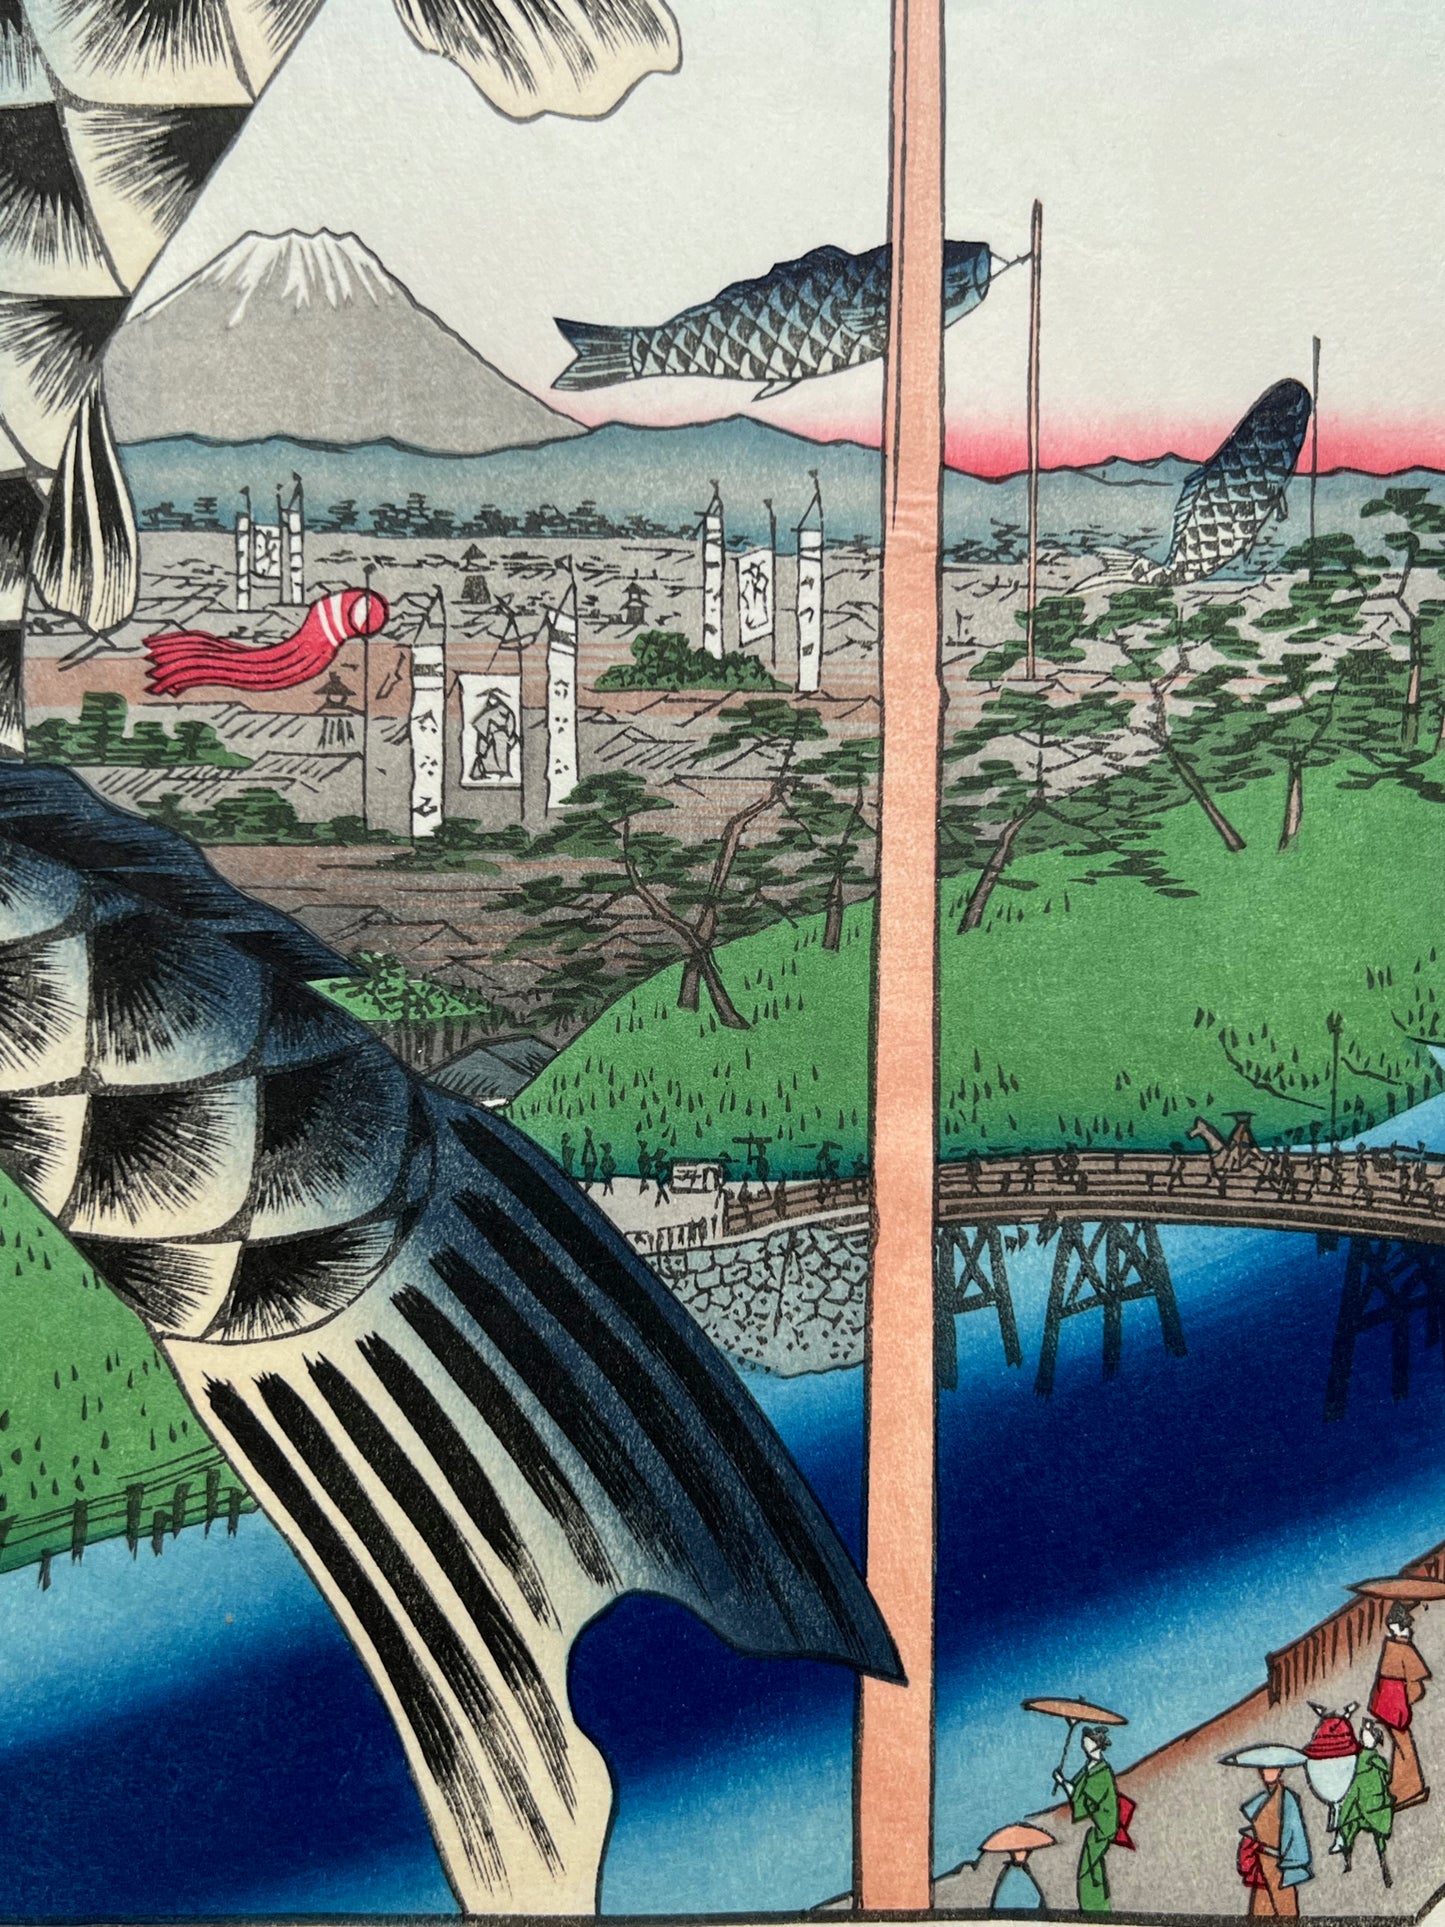     hiroshige-serie-100-vues-edo-suidobashi-koinobori-hi23-01  1536 × 2048 px  estampe japonaise carpe koi en bannière, le mont Fuji au loin